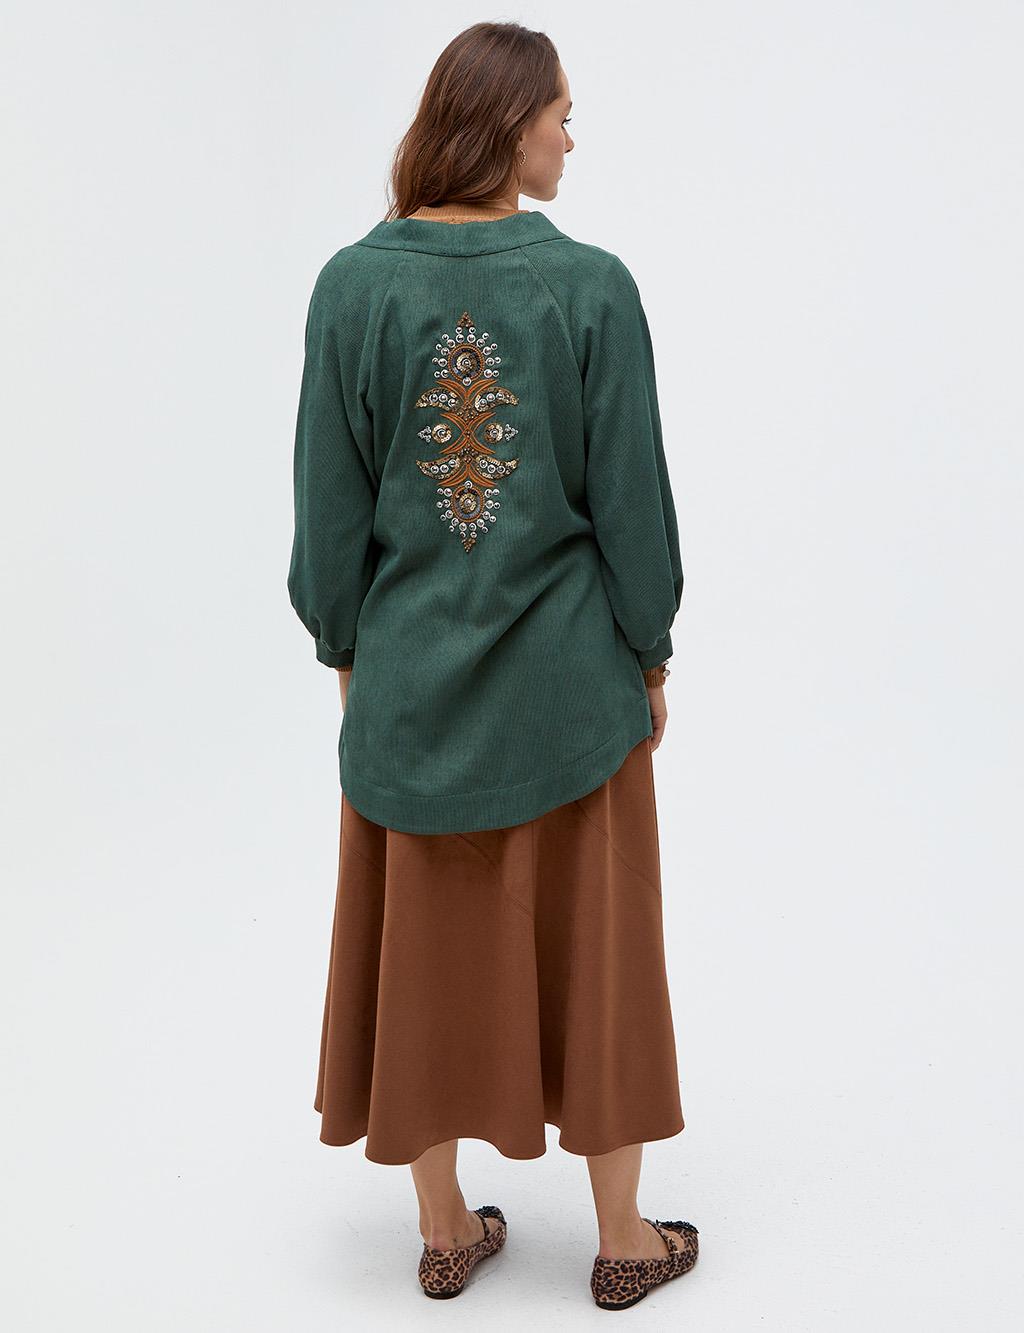 Ethnic Pattern Embroidered Jacket Smoke Green